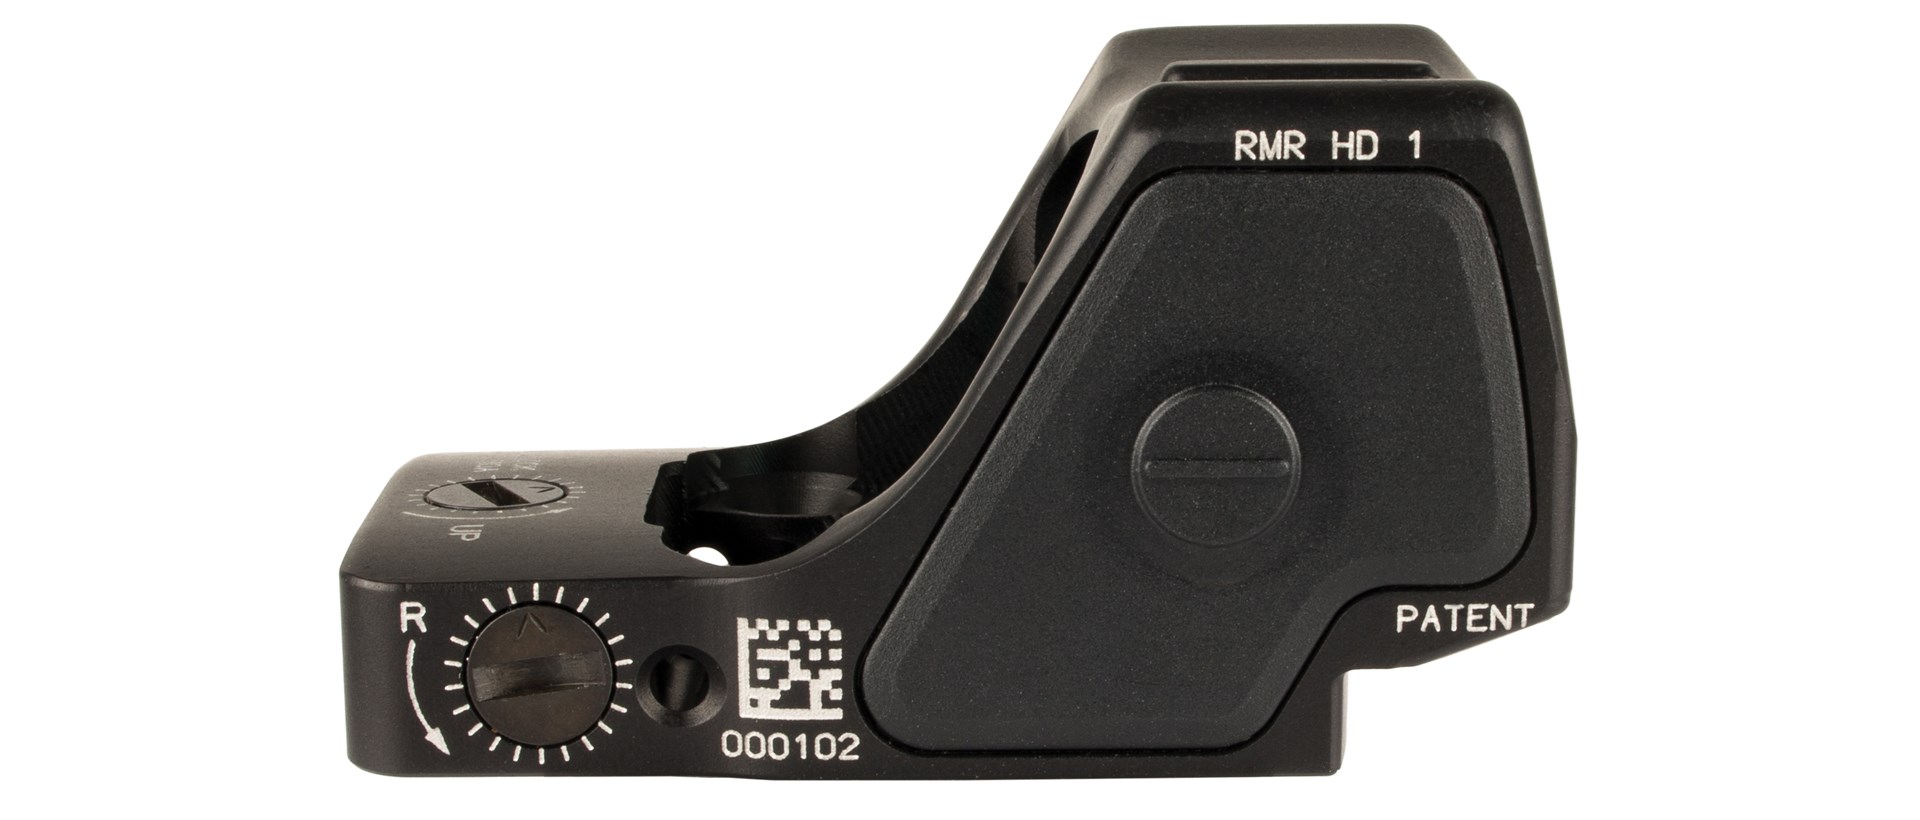 Right-side view Trijicon new RMR HD micro-red-dot optic small black housing button dial handgun reflex sight